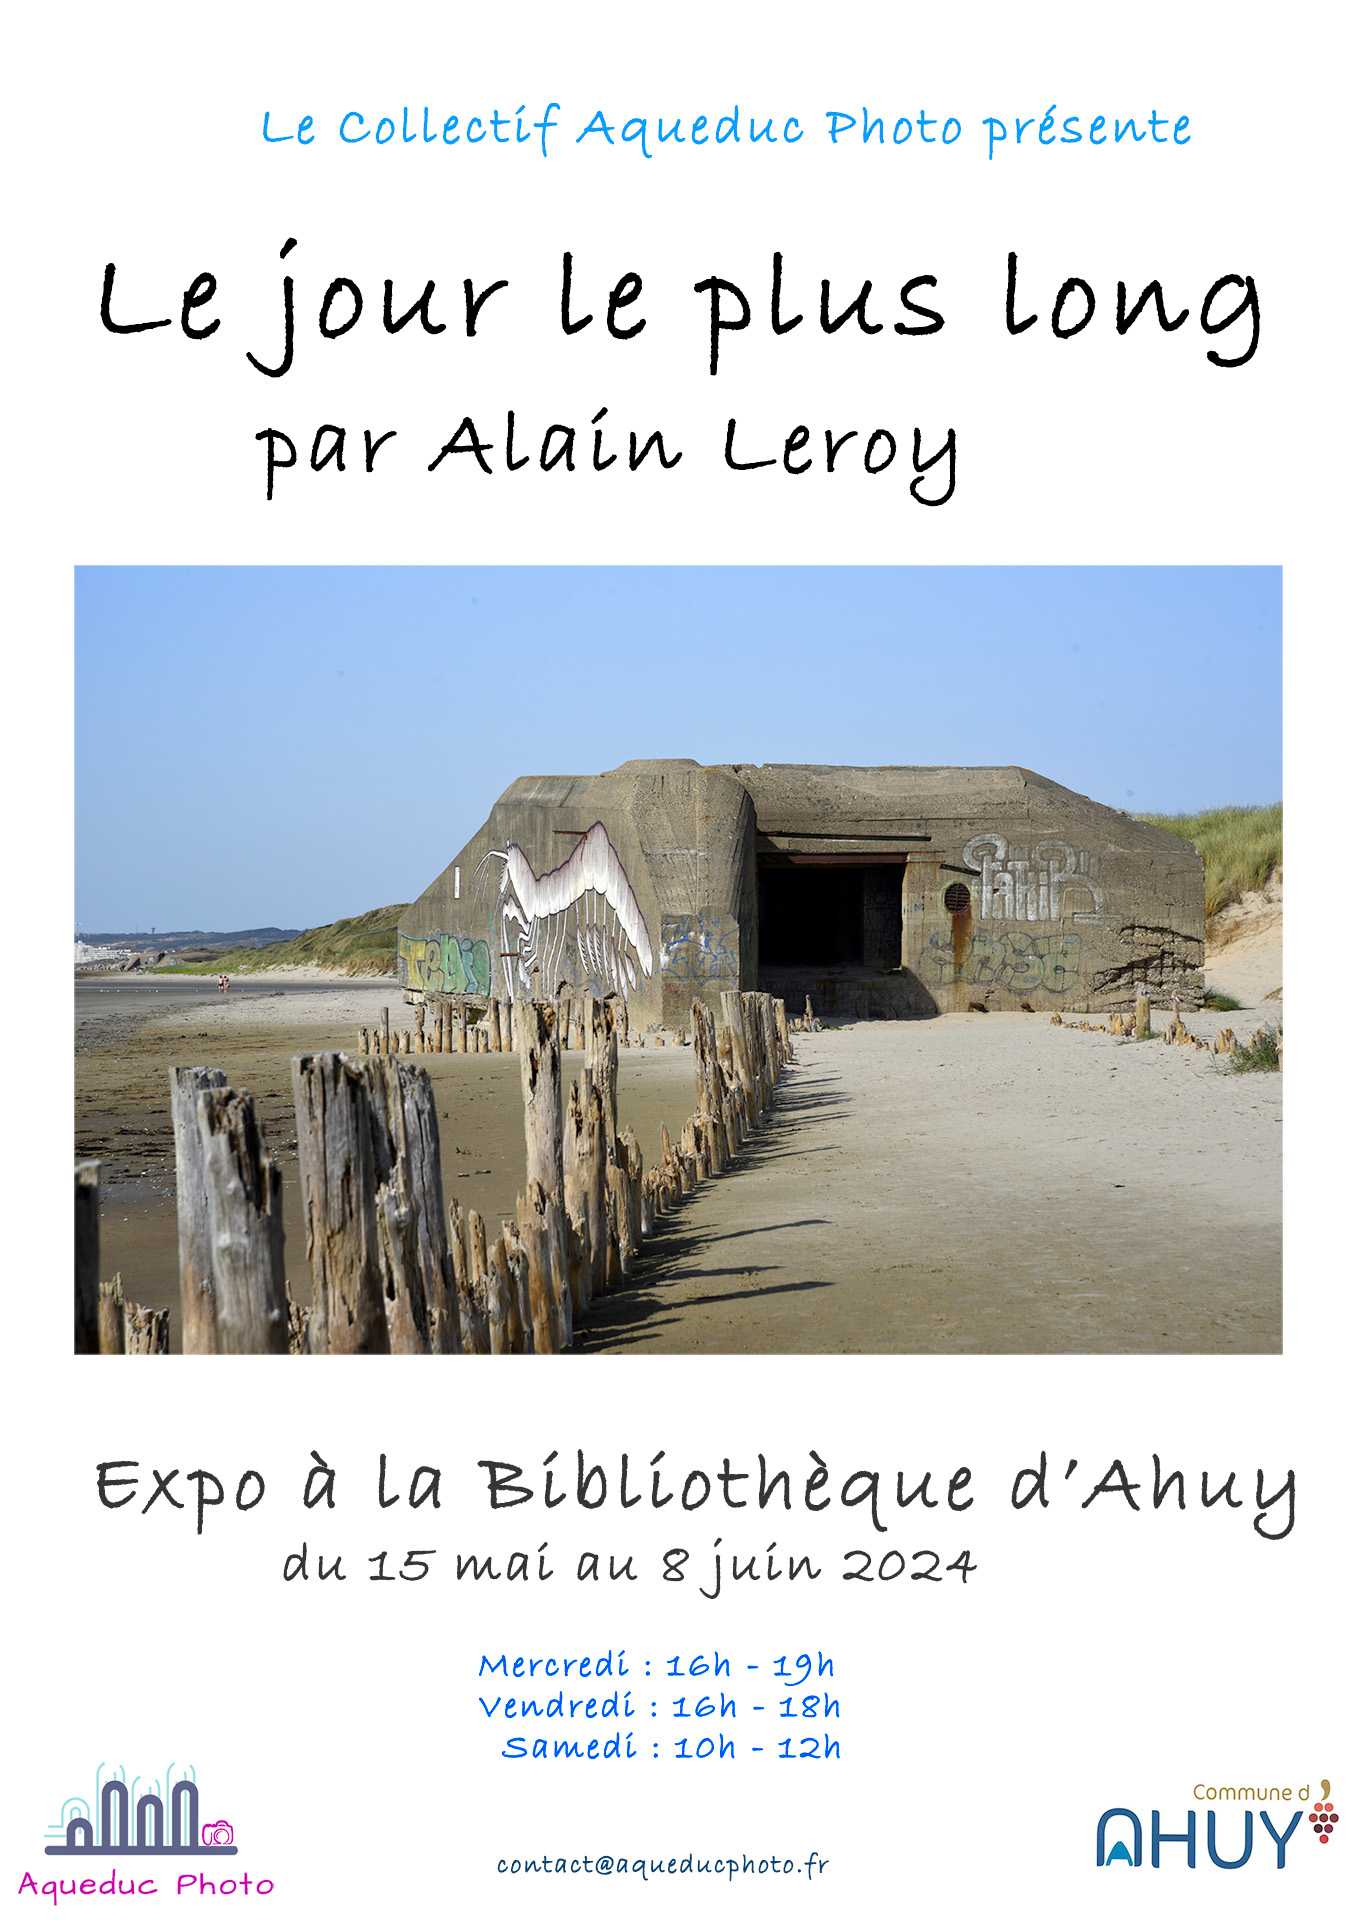 Bibliothèque d’Ahuy – Alain Leroy